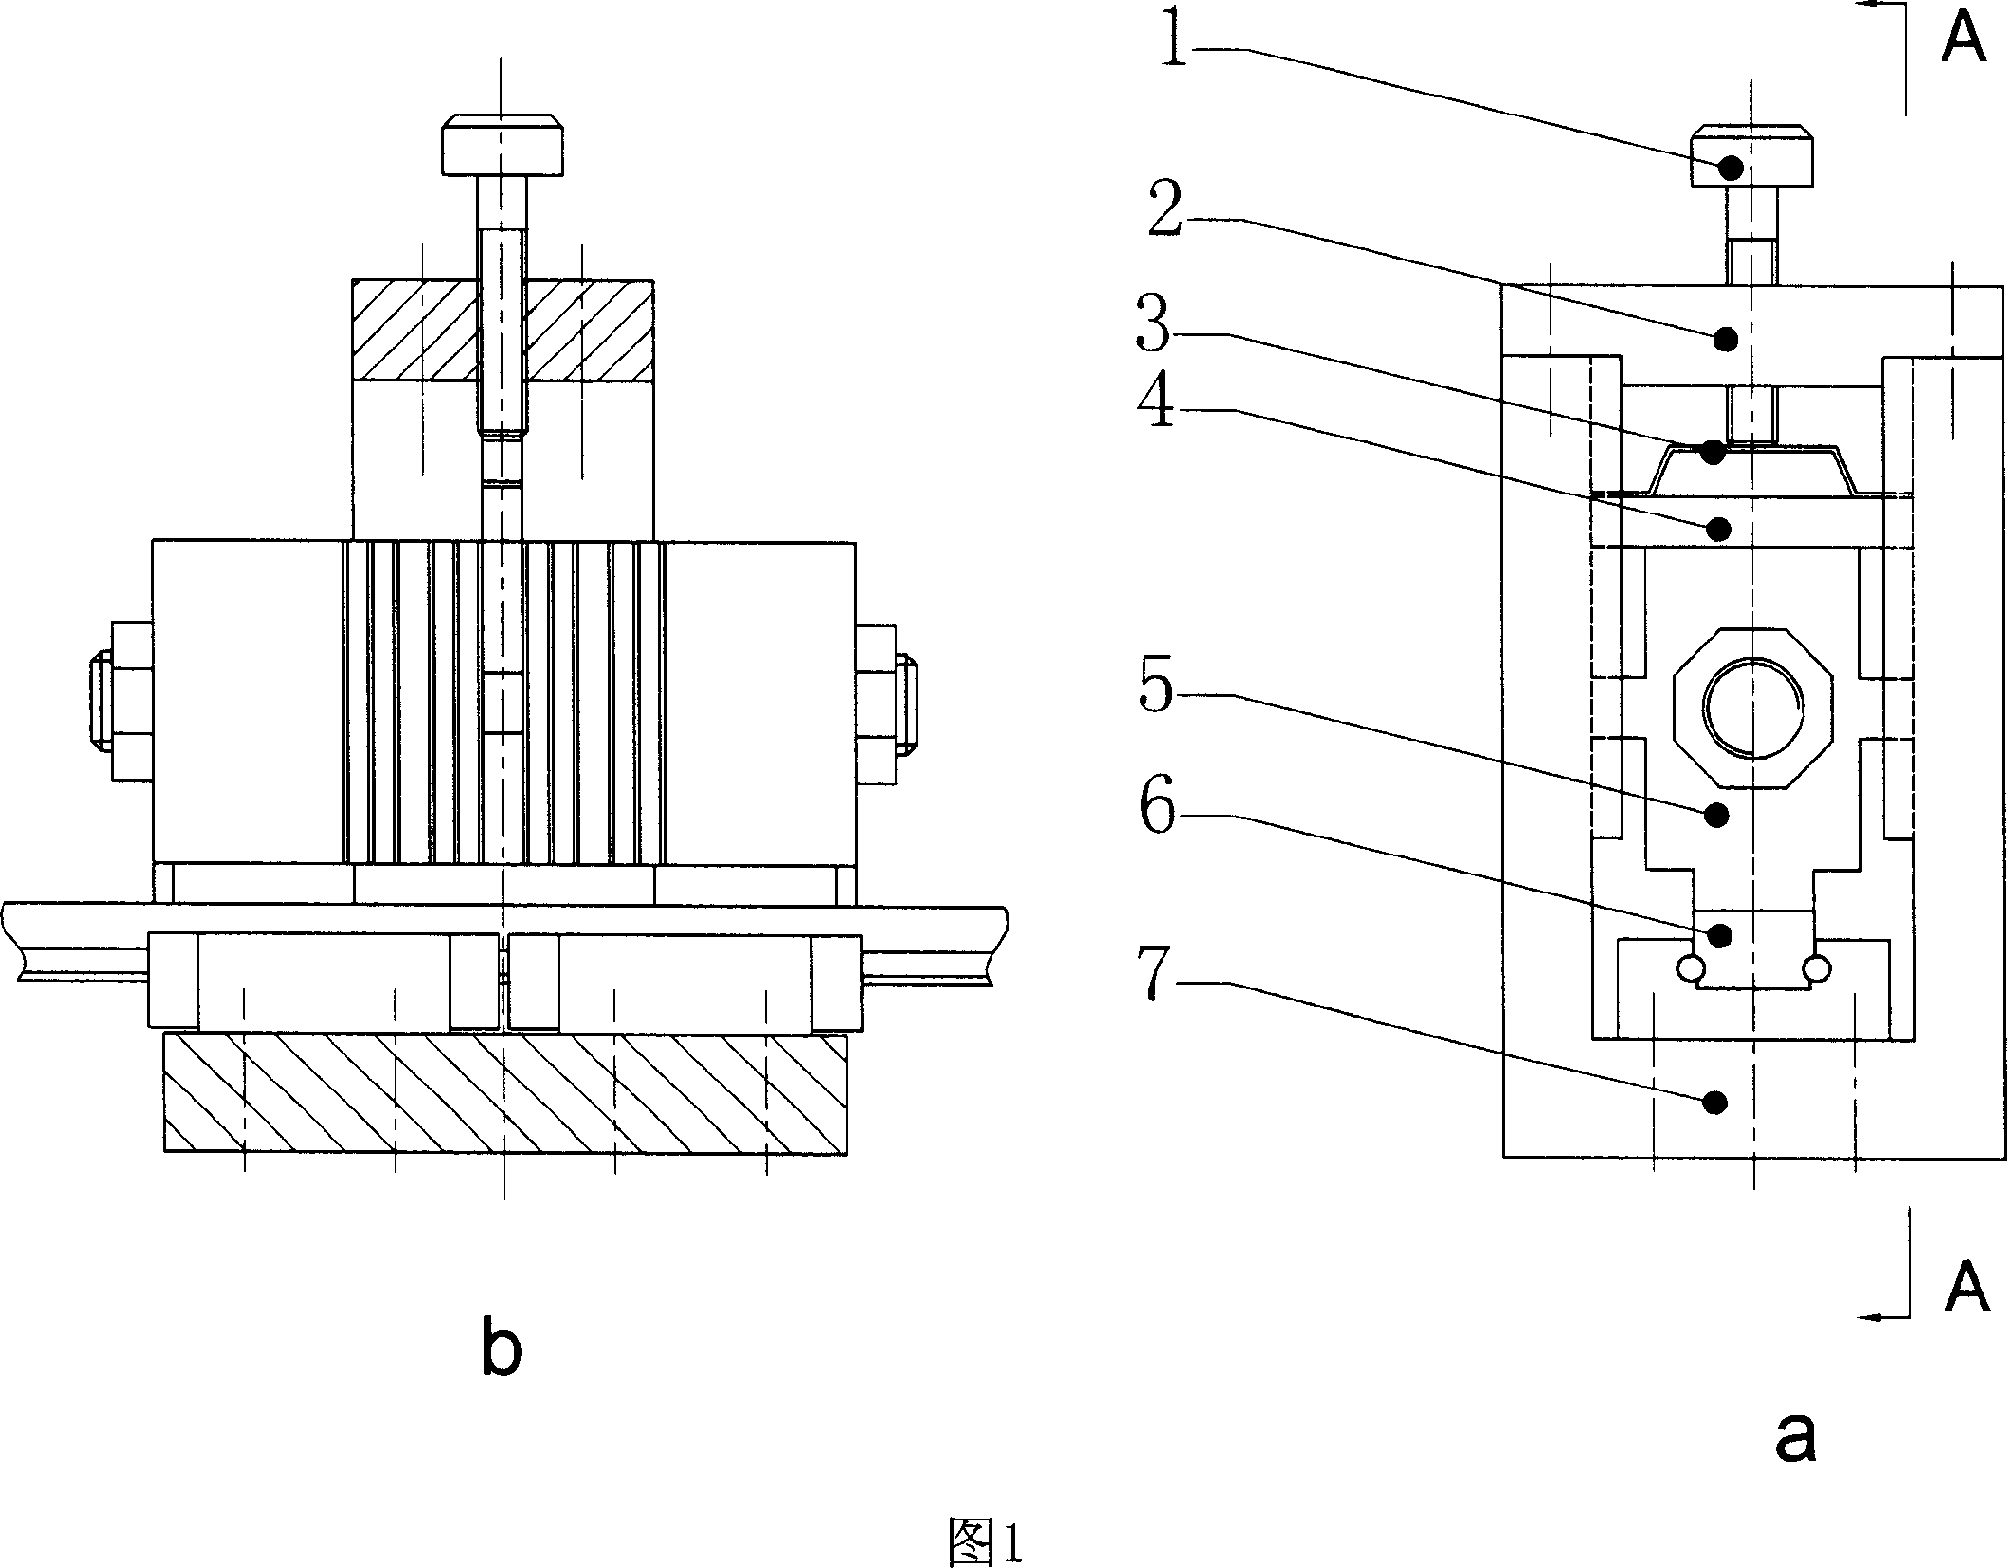 Prism longitudinal bend composite vibrator linear supersonic motor